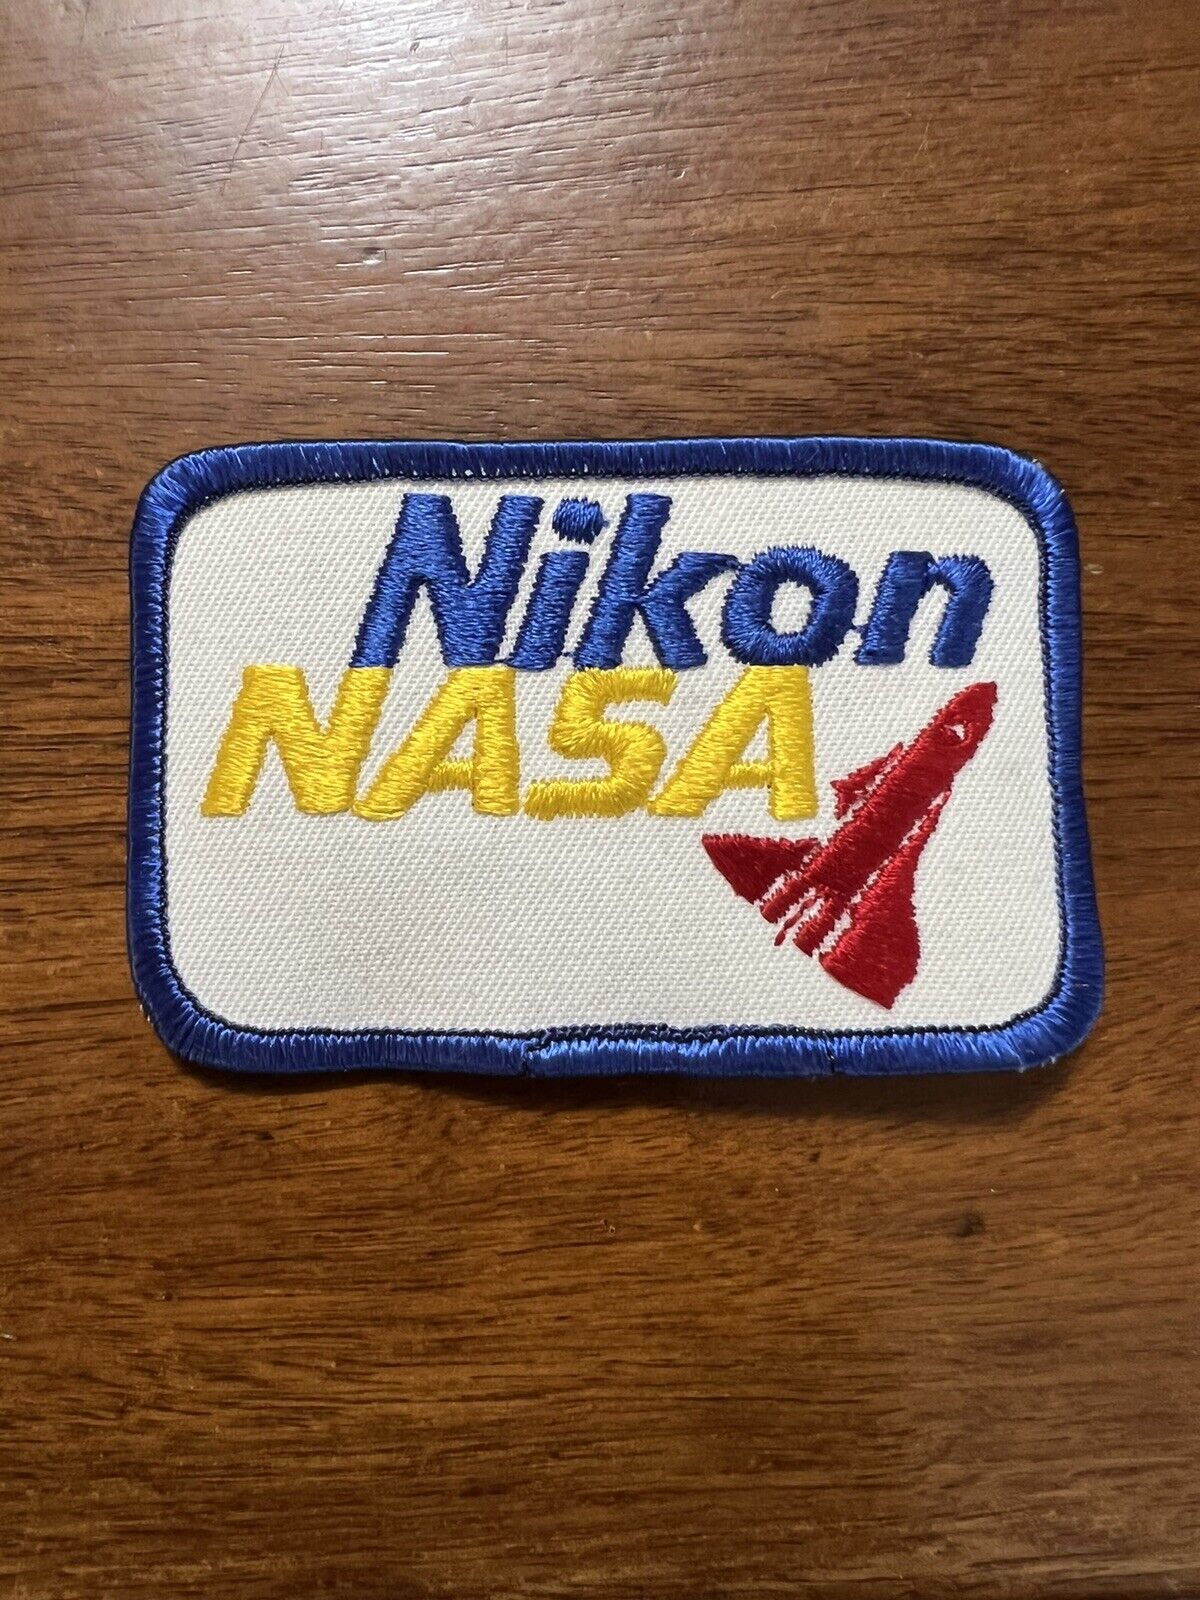 Vintage NIKON NASA Space Shuttle Patch. 80s RARE